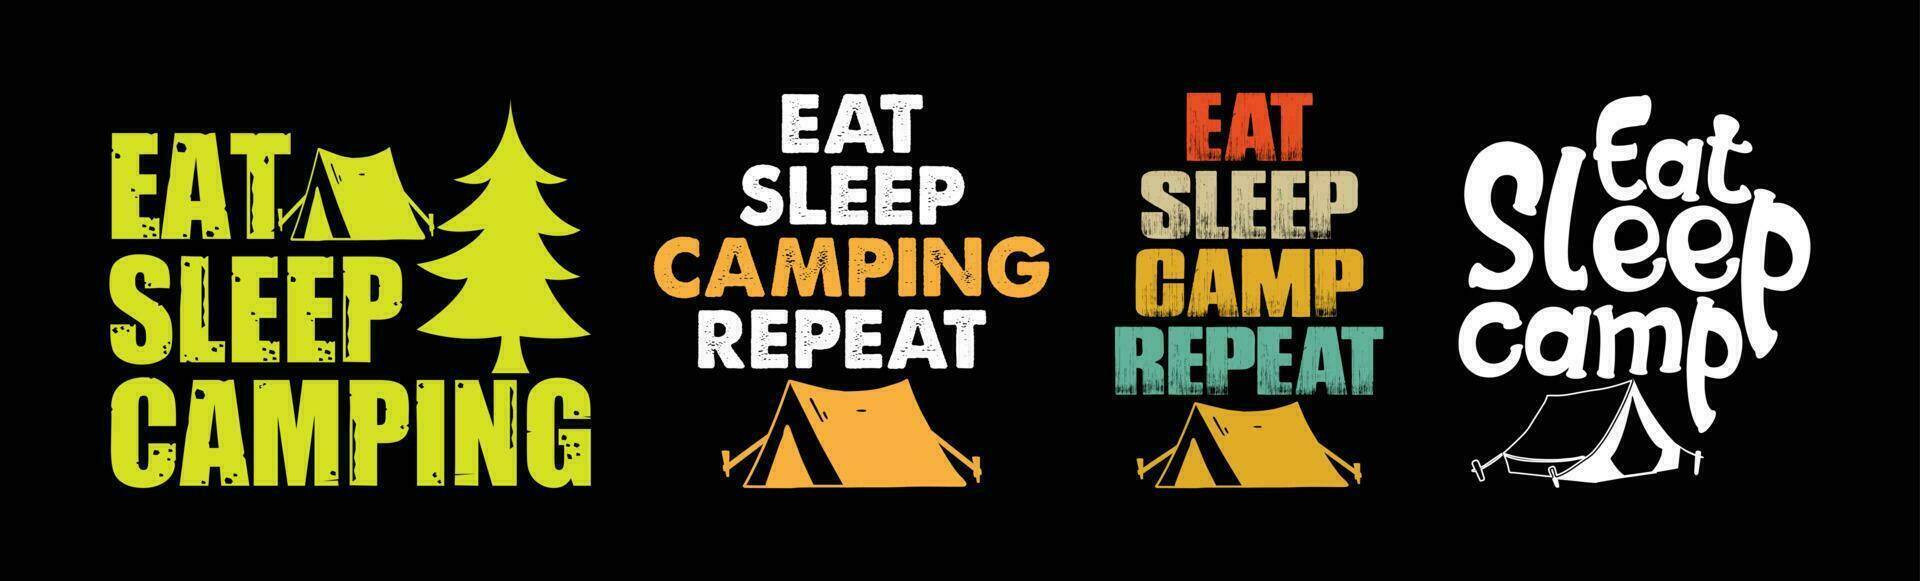 Camping t Hemd Design bündeln, Zitate Über Camping, Abenteuer, draussen, Camping t Shirt, wandern, Camping Typografie t Hemd Design Sammlung vektor